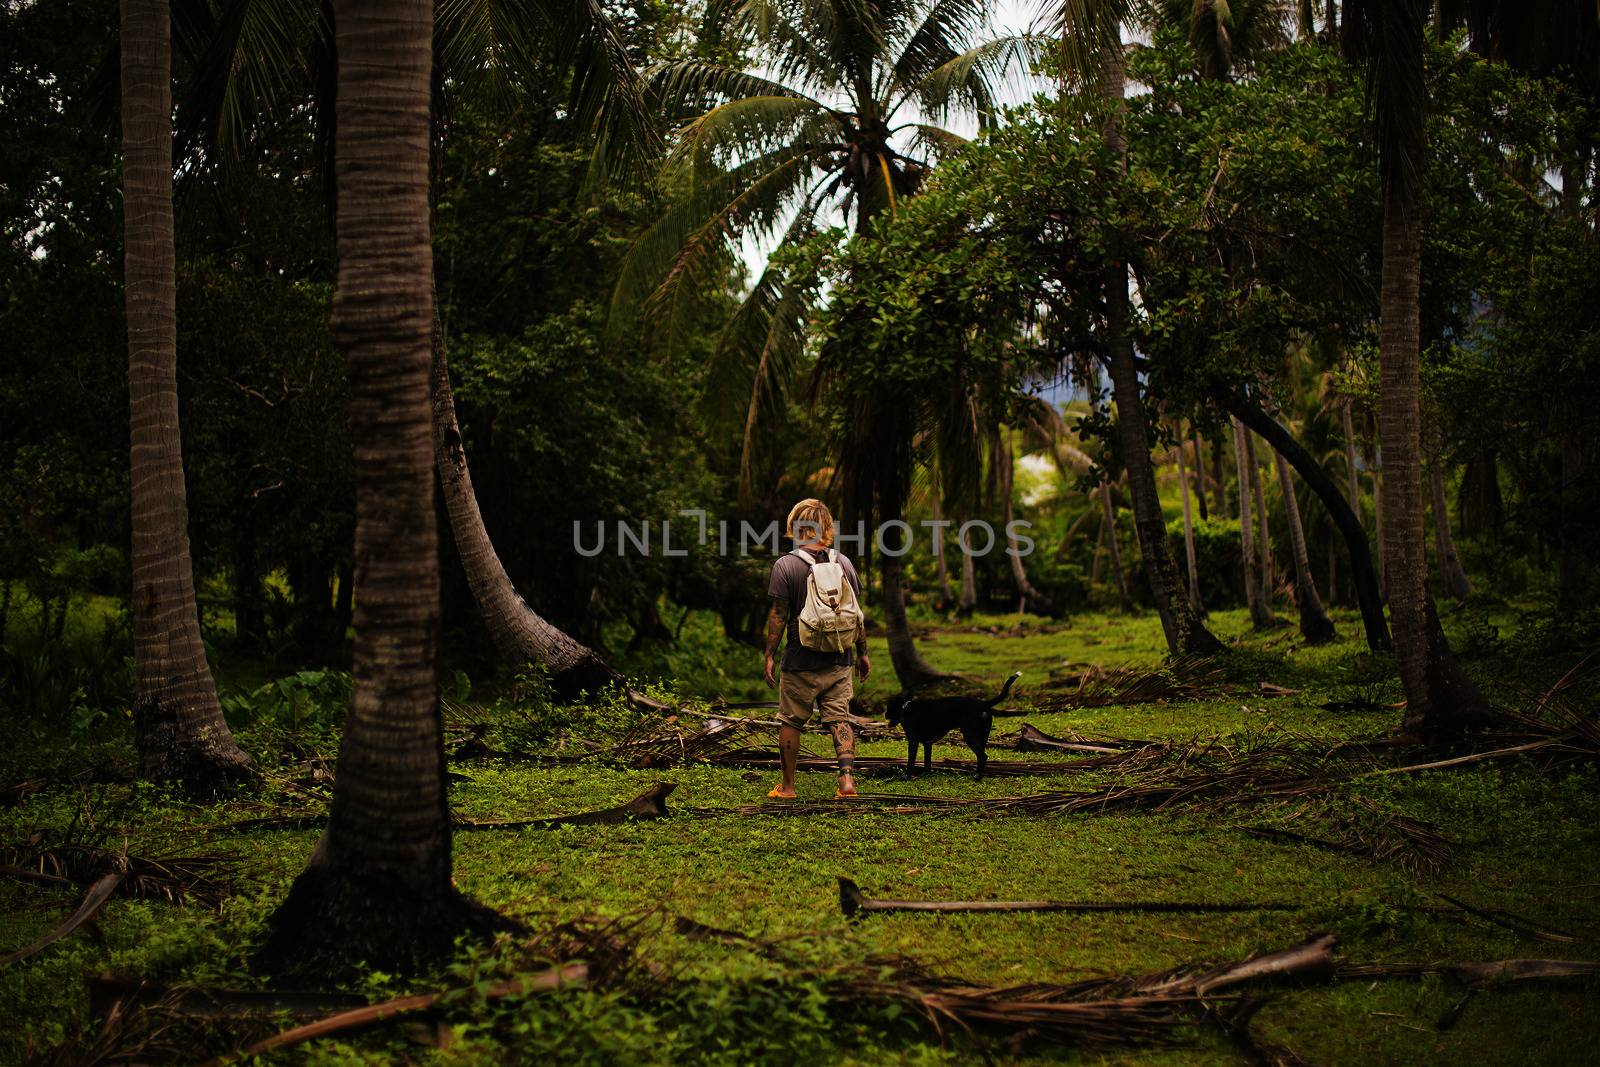 Man with a dog in tropical thailand garden